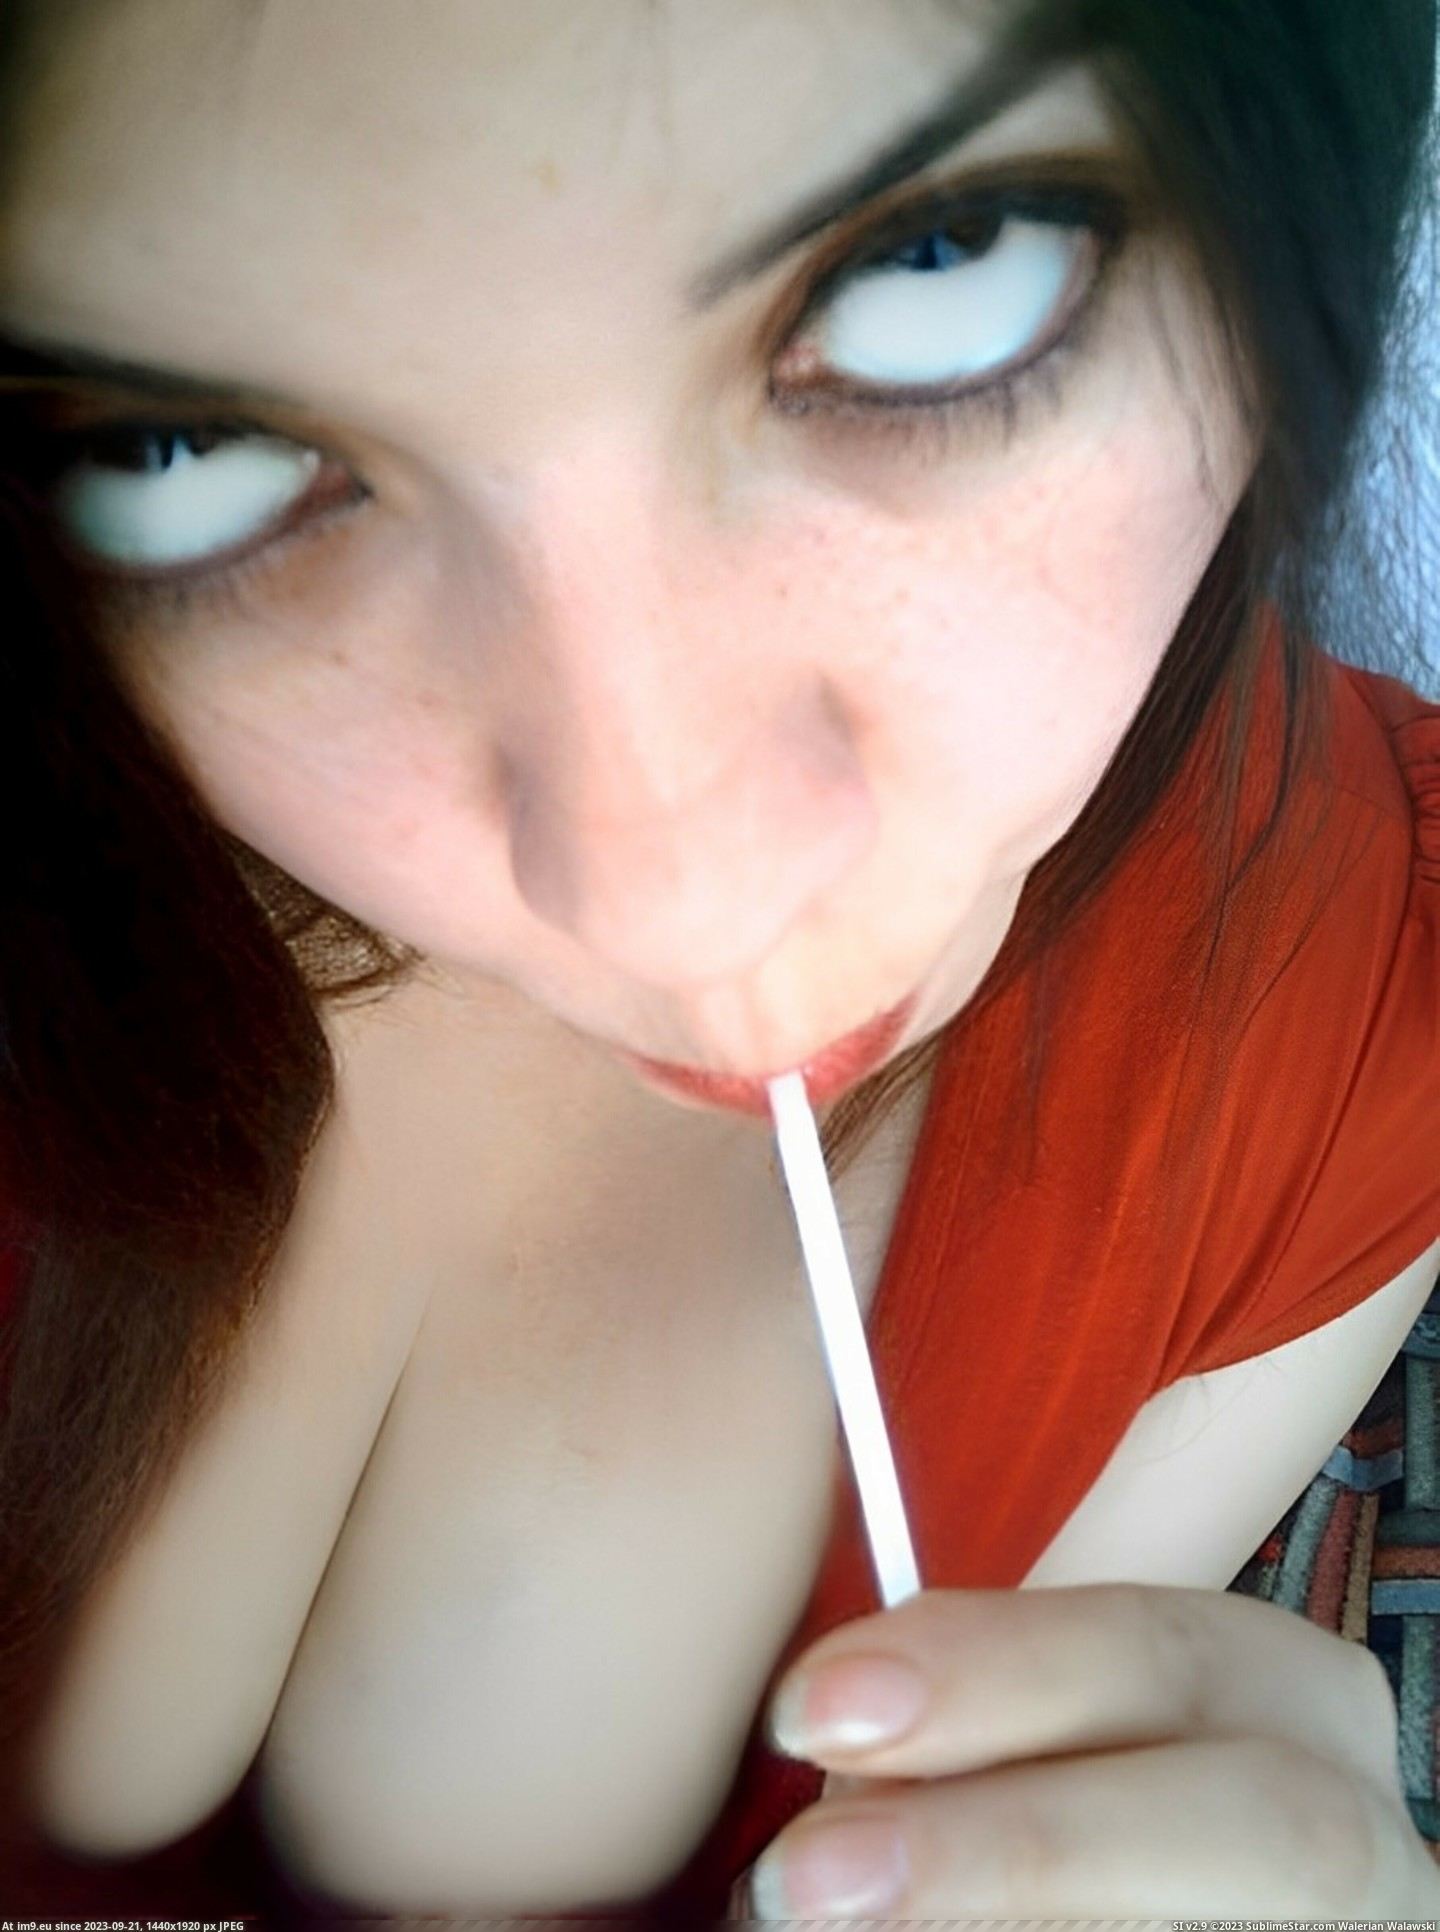 #Orgasm #Carolina #Putabarata #Lollipop #Bellota Carolina Bellota lollipop Pic. (Obraz z album Instant Upload))